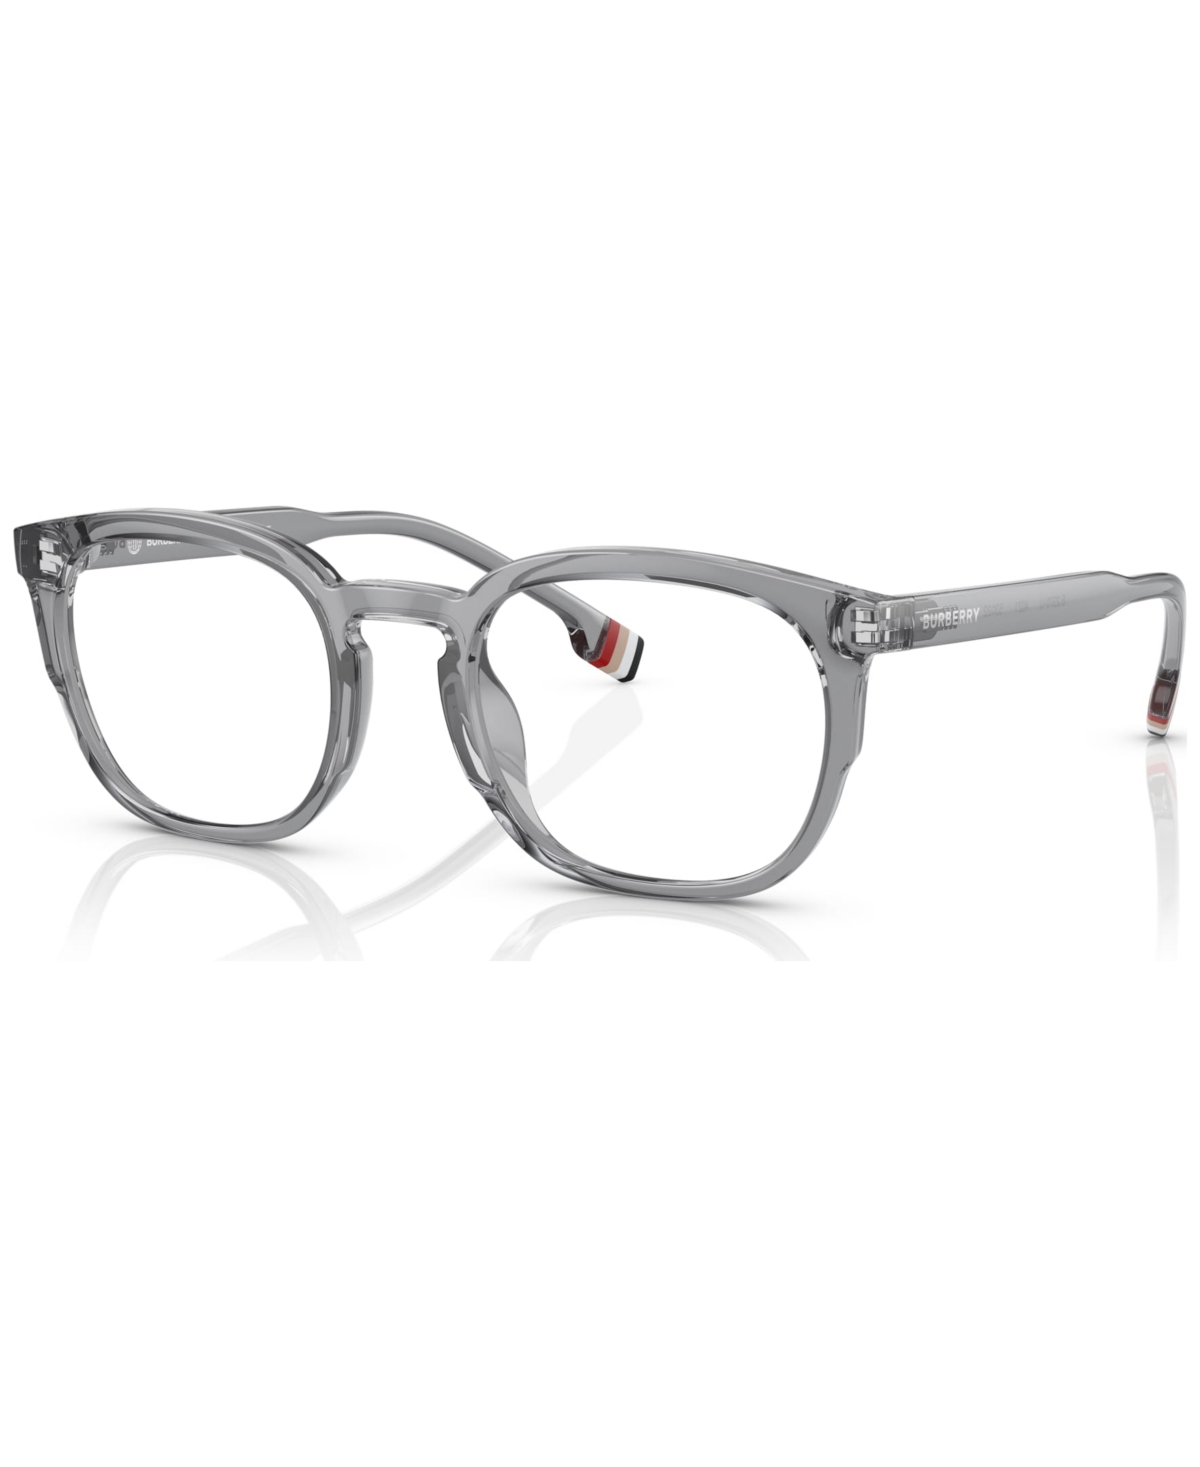 Men's Square Eyeglasses, BE2370U53-o - Gray